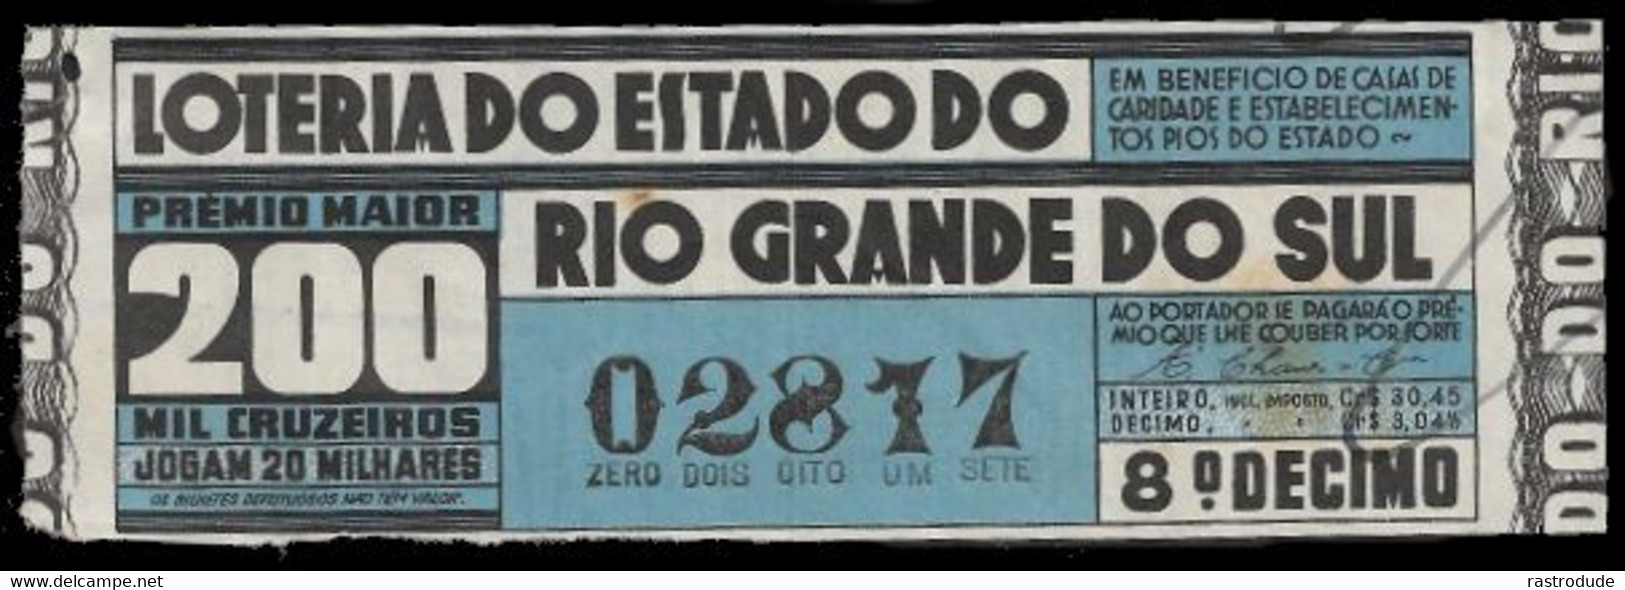 1943 BRAZIL BRASIL - LOTTERY TICKET BILHETE DE LOTERIA DO RIO GRANDE DO SUL - Lottery Tickets